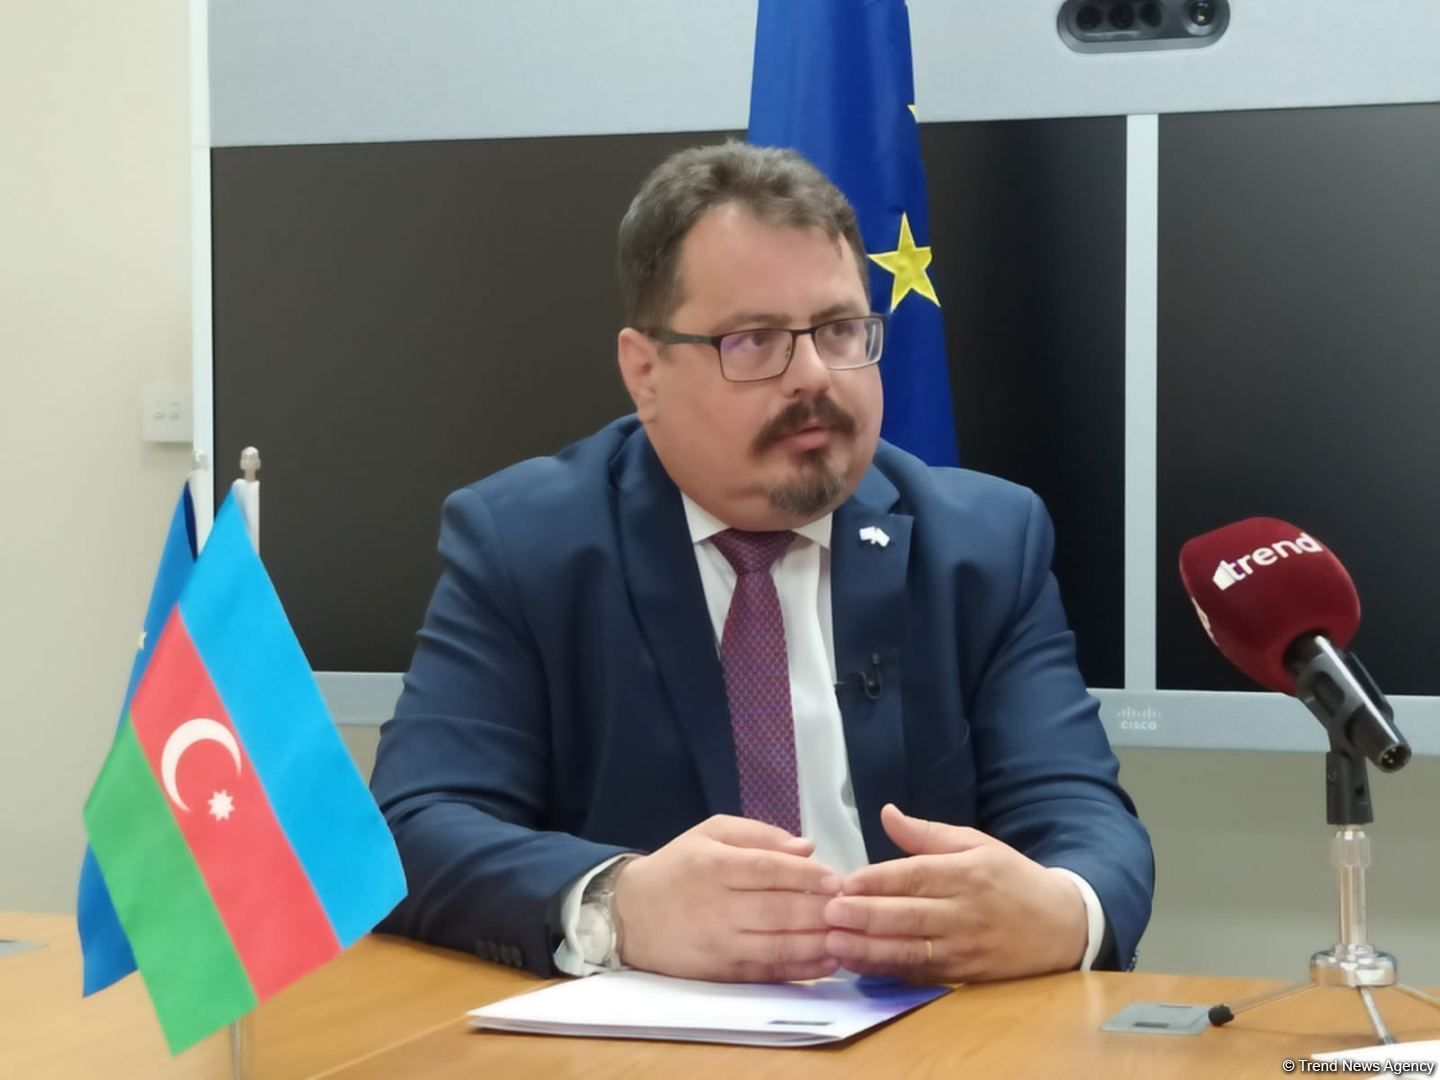 Memorandum in energy sector to open new stage in EU-Azerbaijani co-op, ambassador says